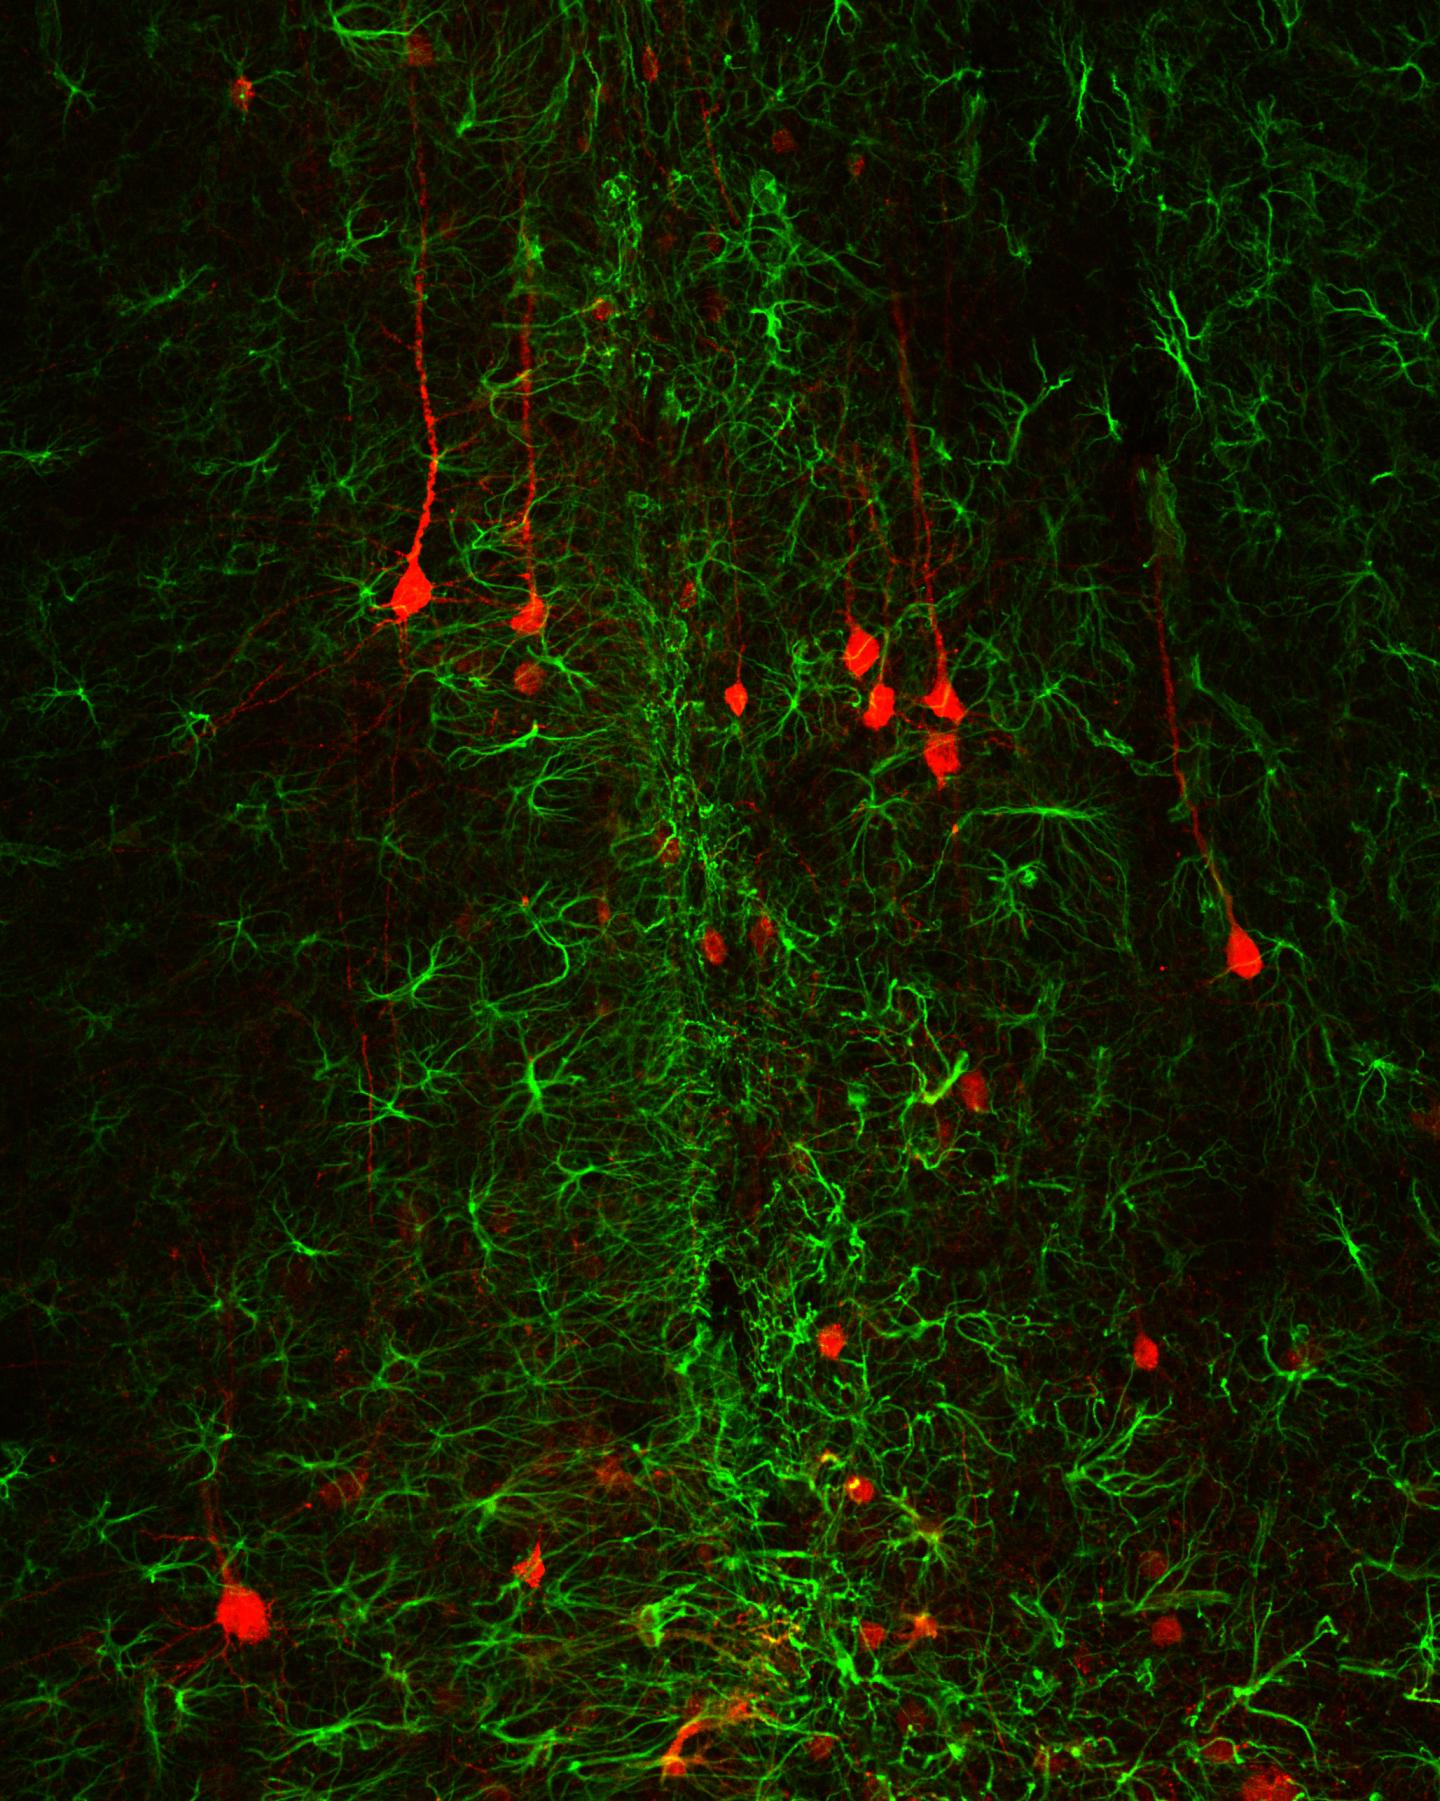 Reversal of Glial Scar Tissue Back to Neuronal Tissue Through Neuroregenerative Gene Therapy